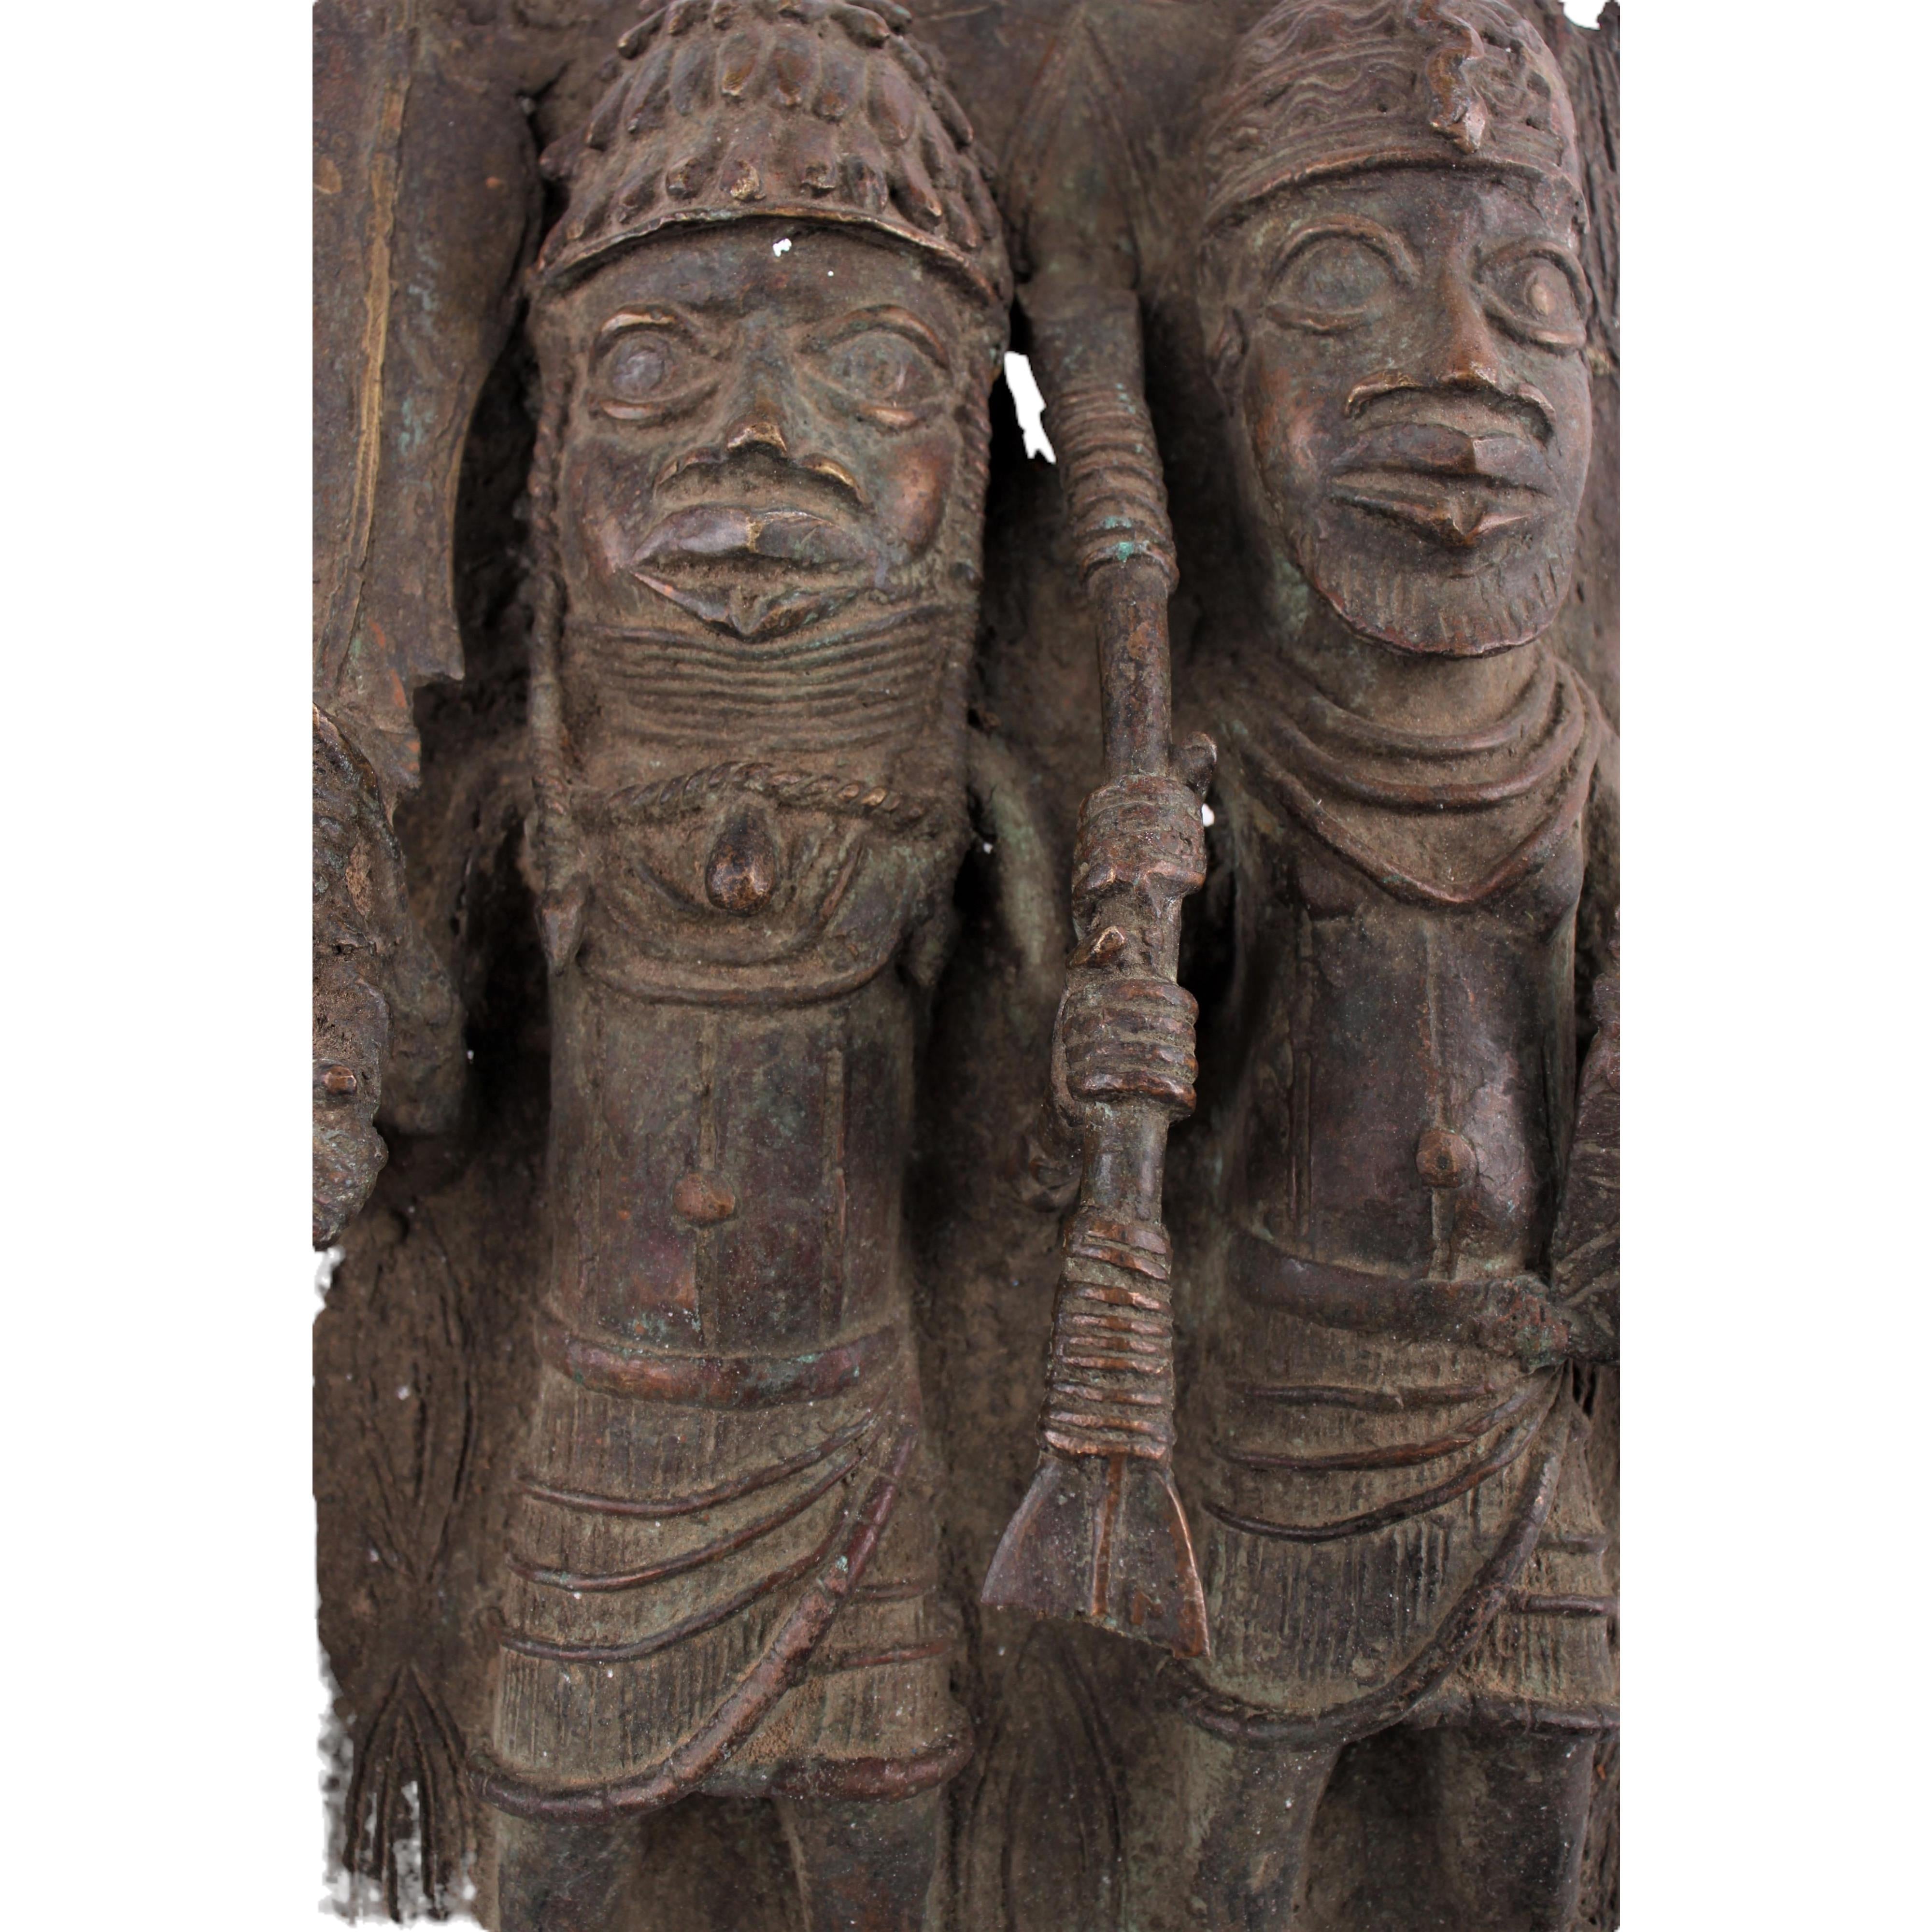 Edo Tribe Plaques ~13.0" Tall